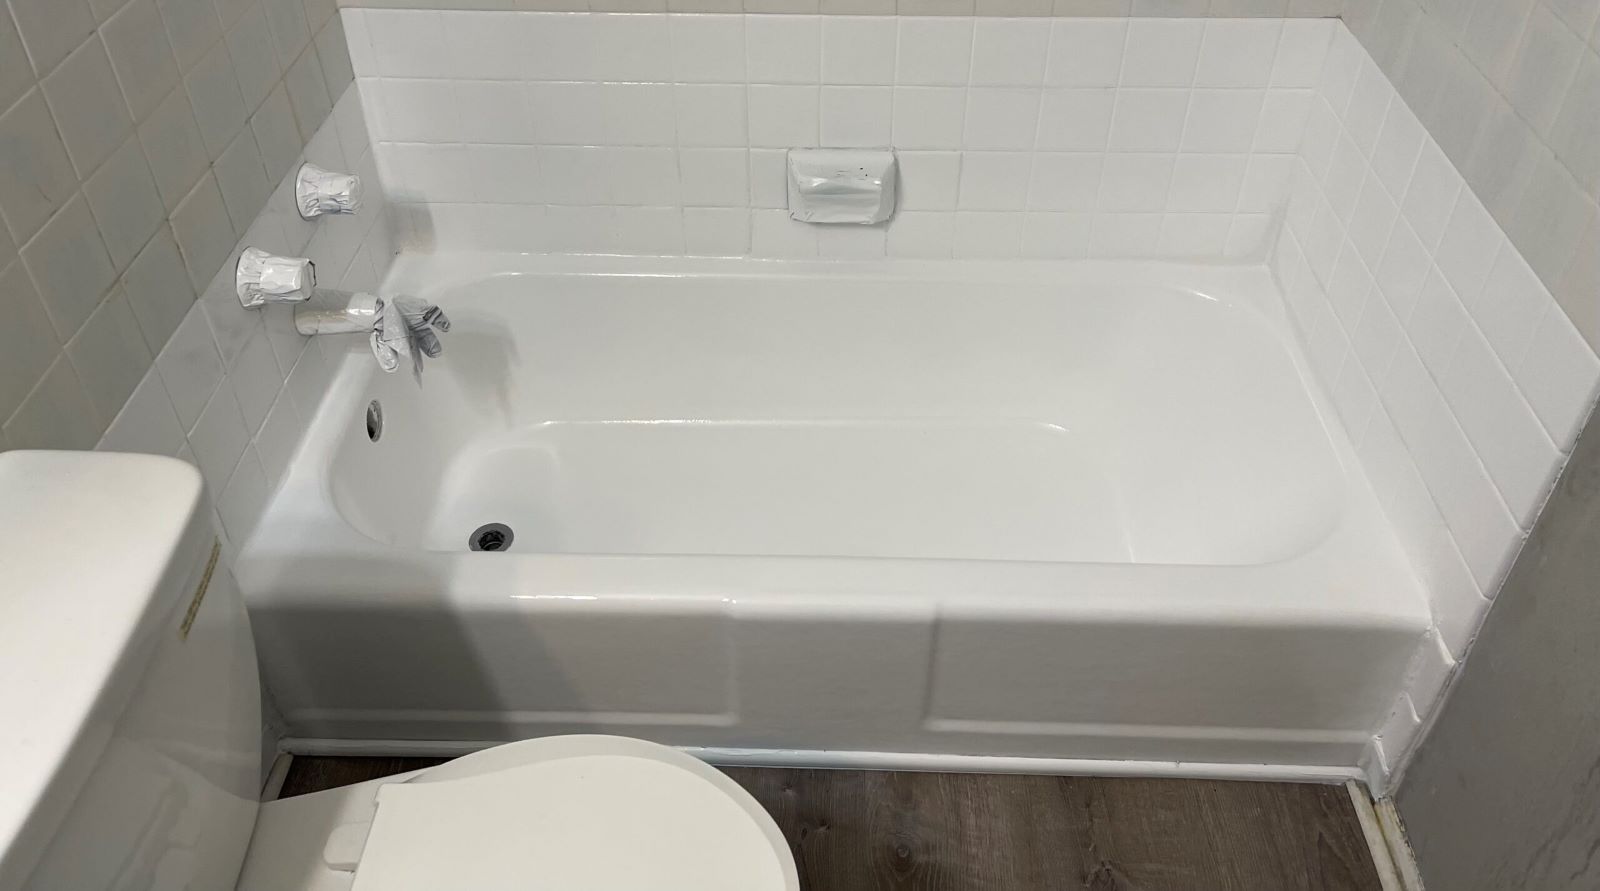 Low Cost Bathtub Refinishing in Sunset Hills, MO | Affordable Tub Reglazing Near Sunset Hills